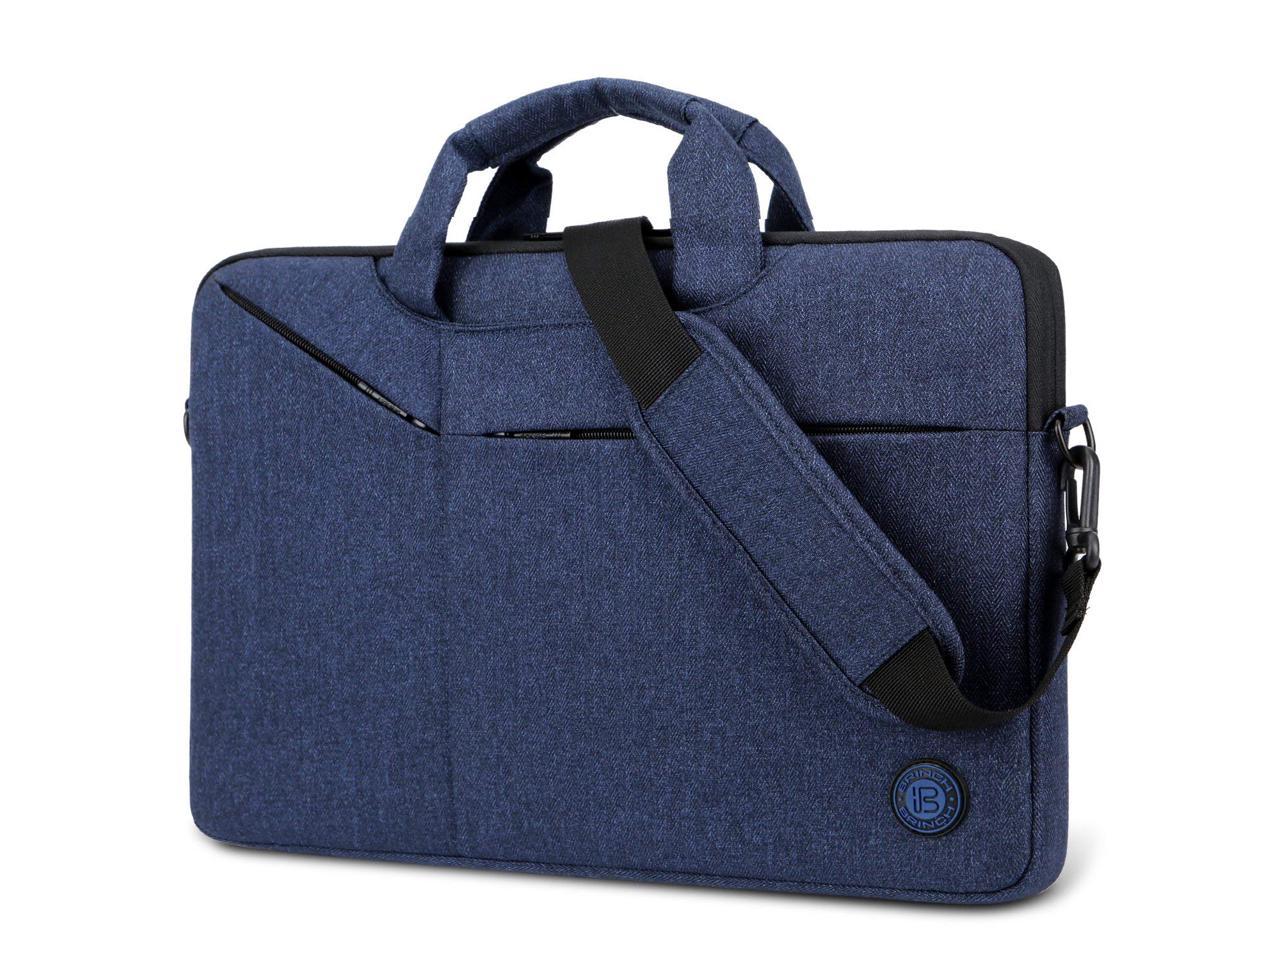 imobaby Laptop Bag Skull On Rose Ccamouflage Messenger Shoulder Bag Briefcase Notebook Sleeve Carrying Handbag 15-15.4 inches